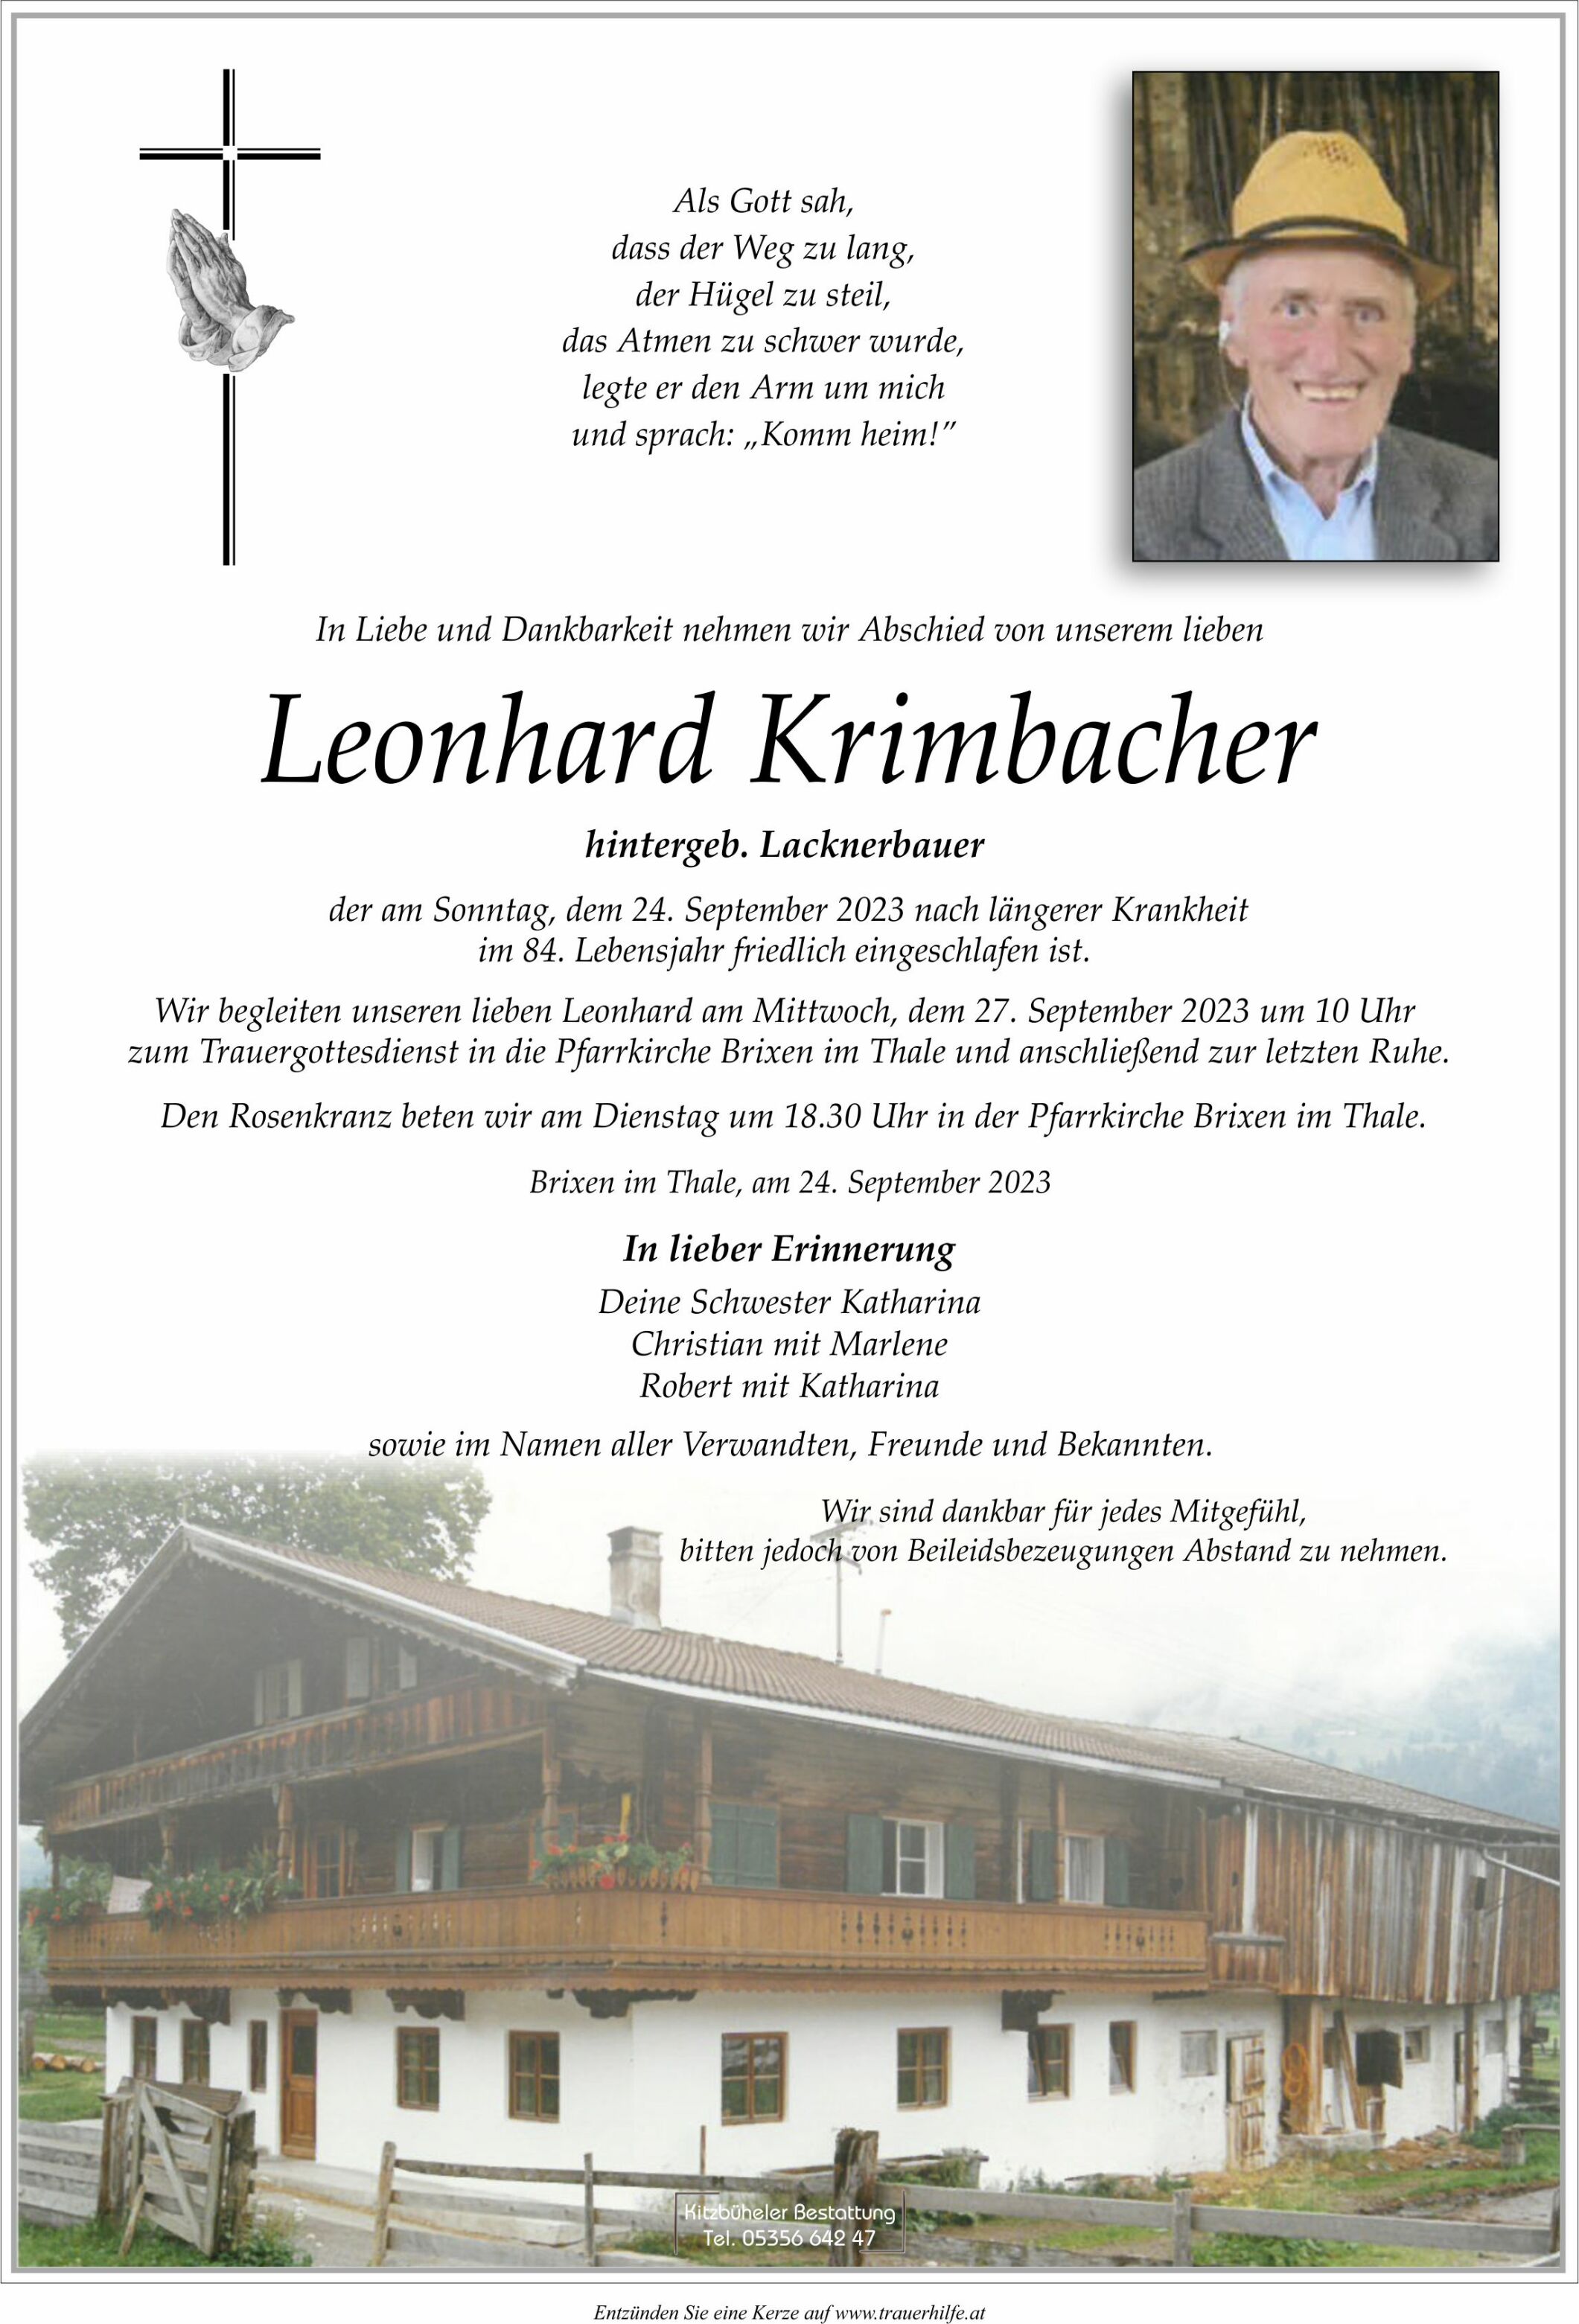 Leonhard Krimbacher